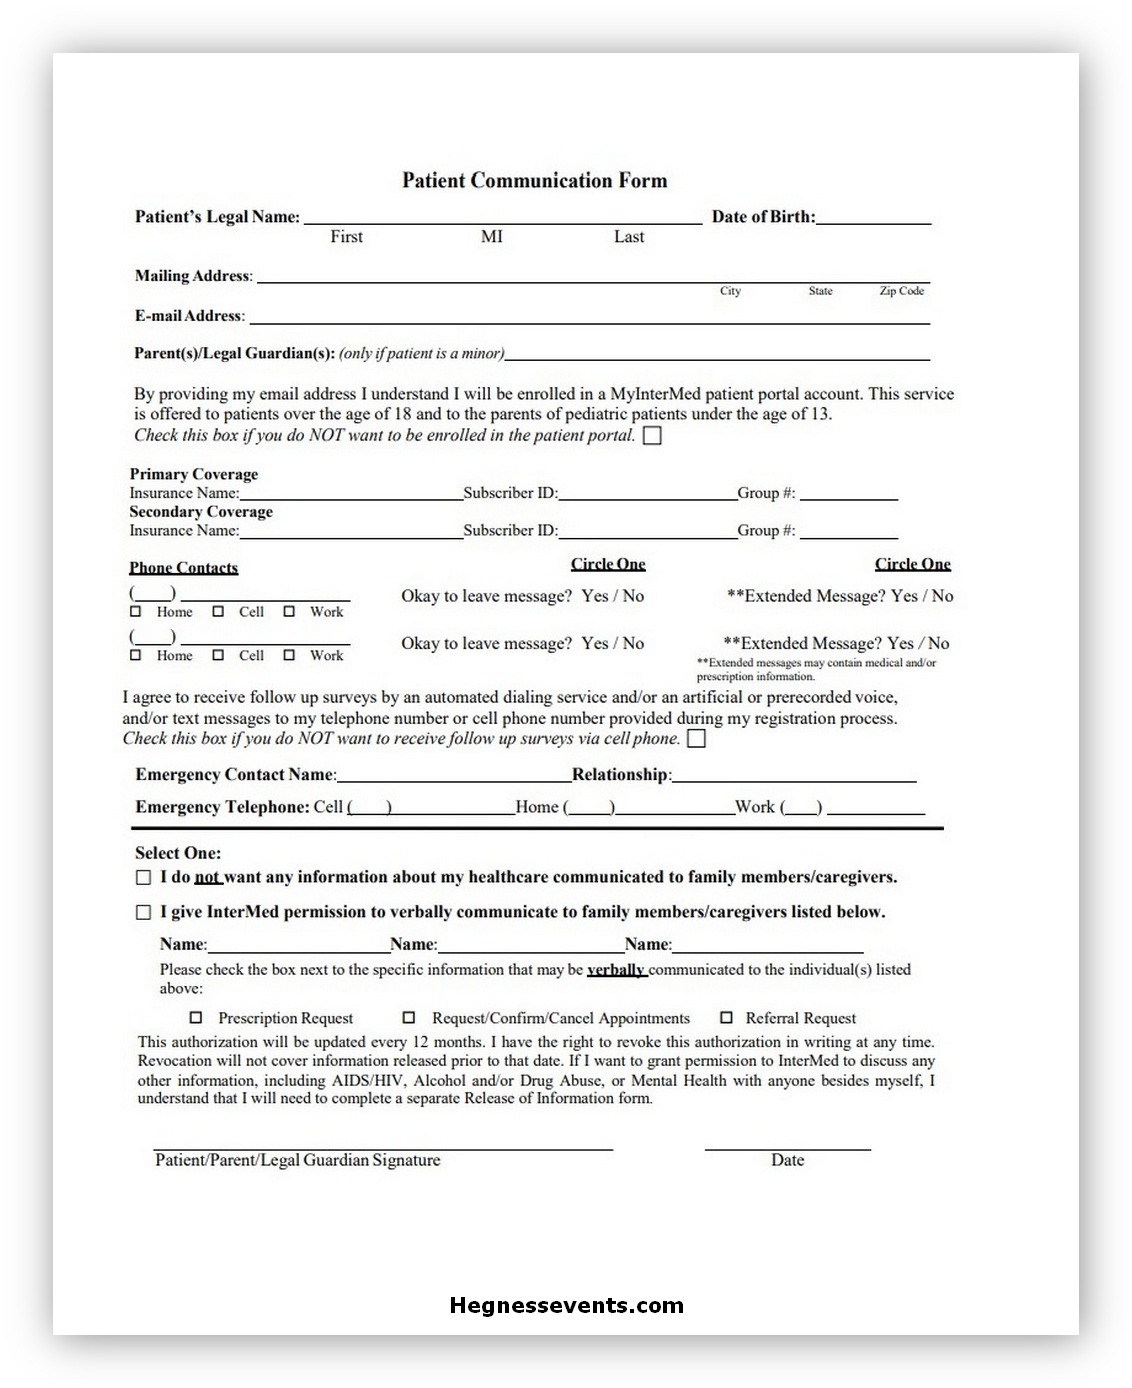 Patient Communication Form in PDF